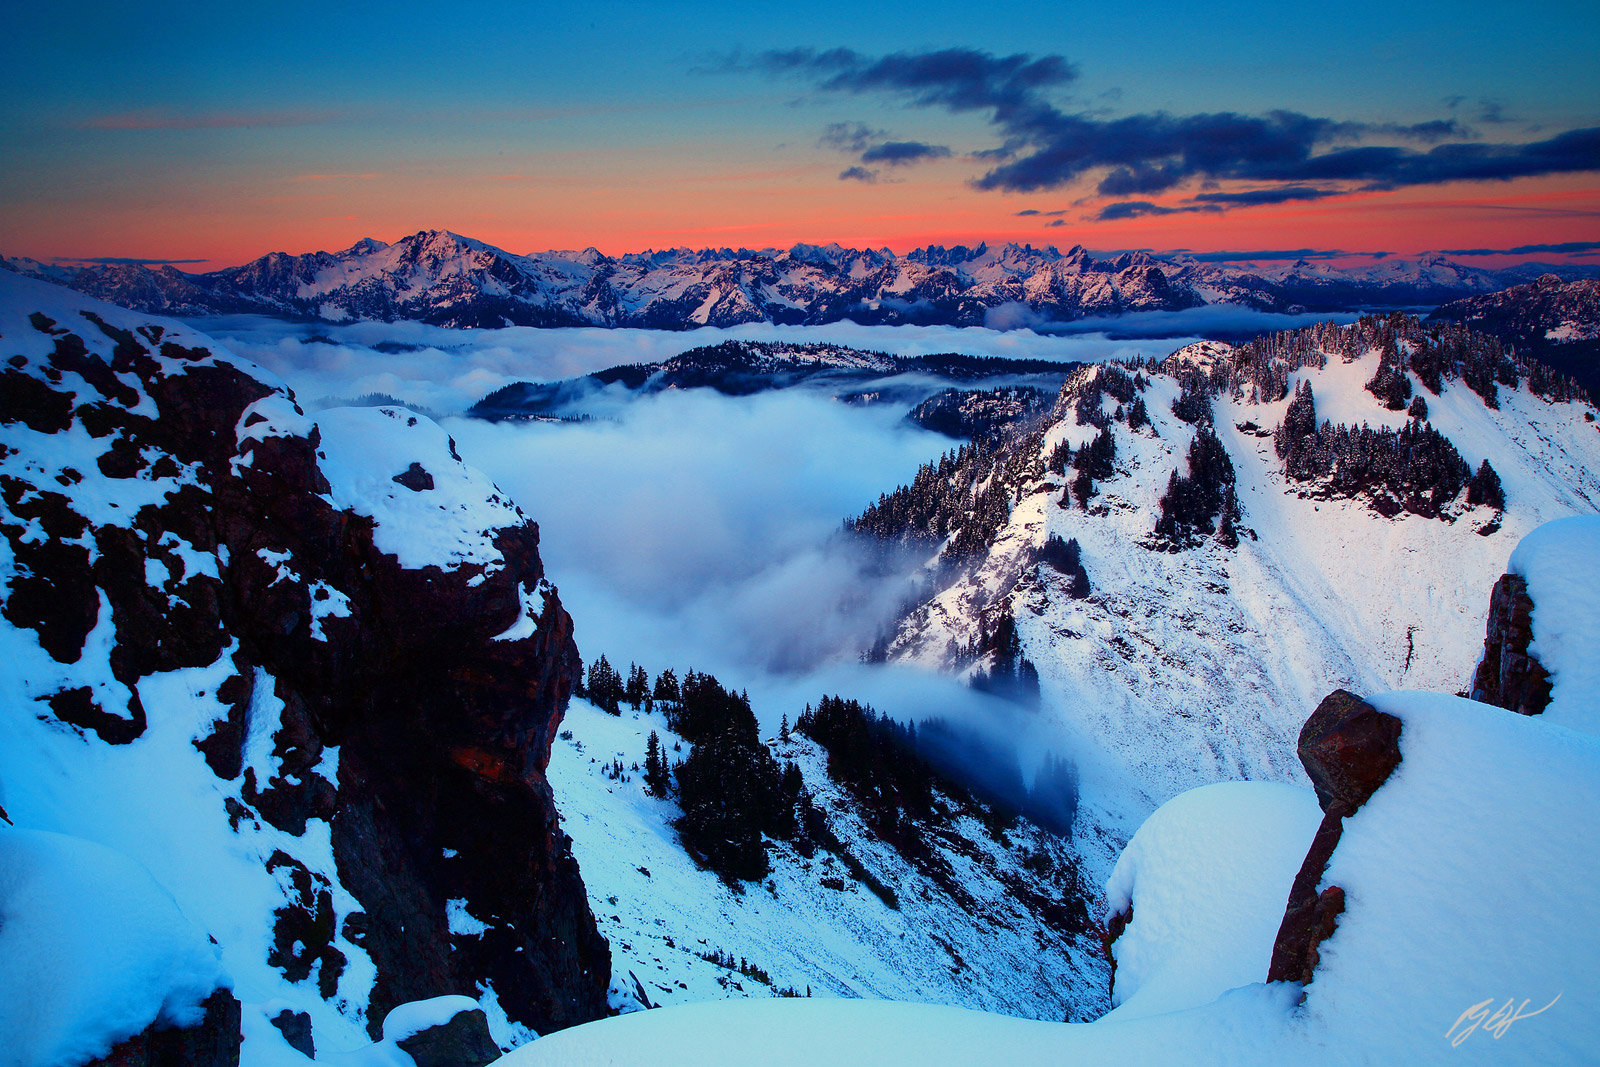 Winter Sunset over the North Cascades from Sauk Mountain Summit in Washington